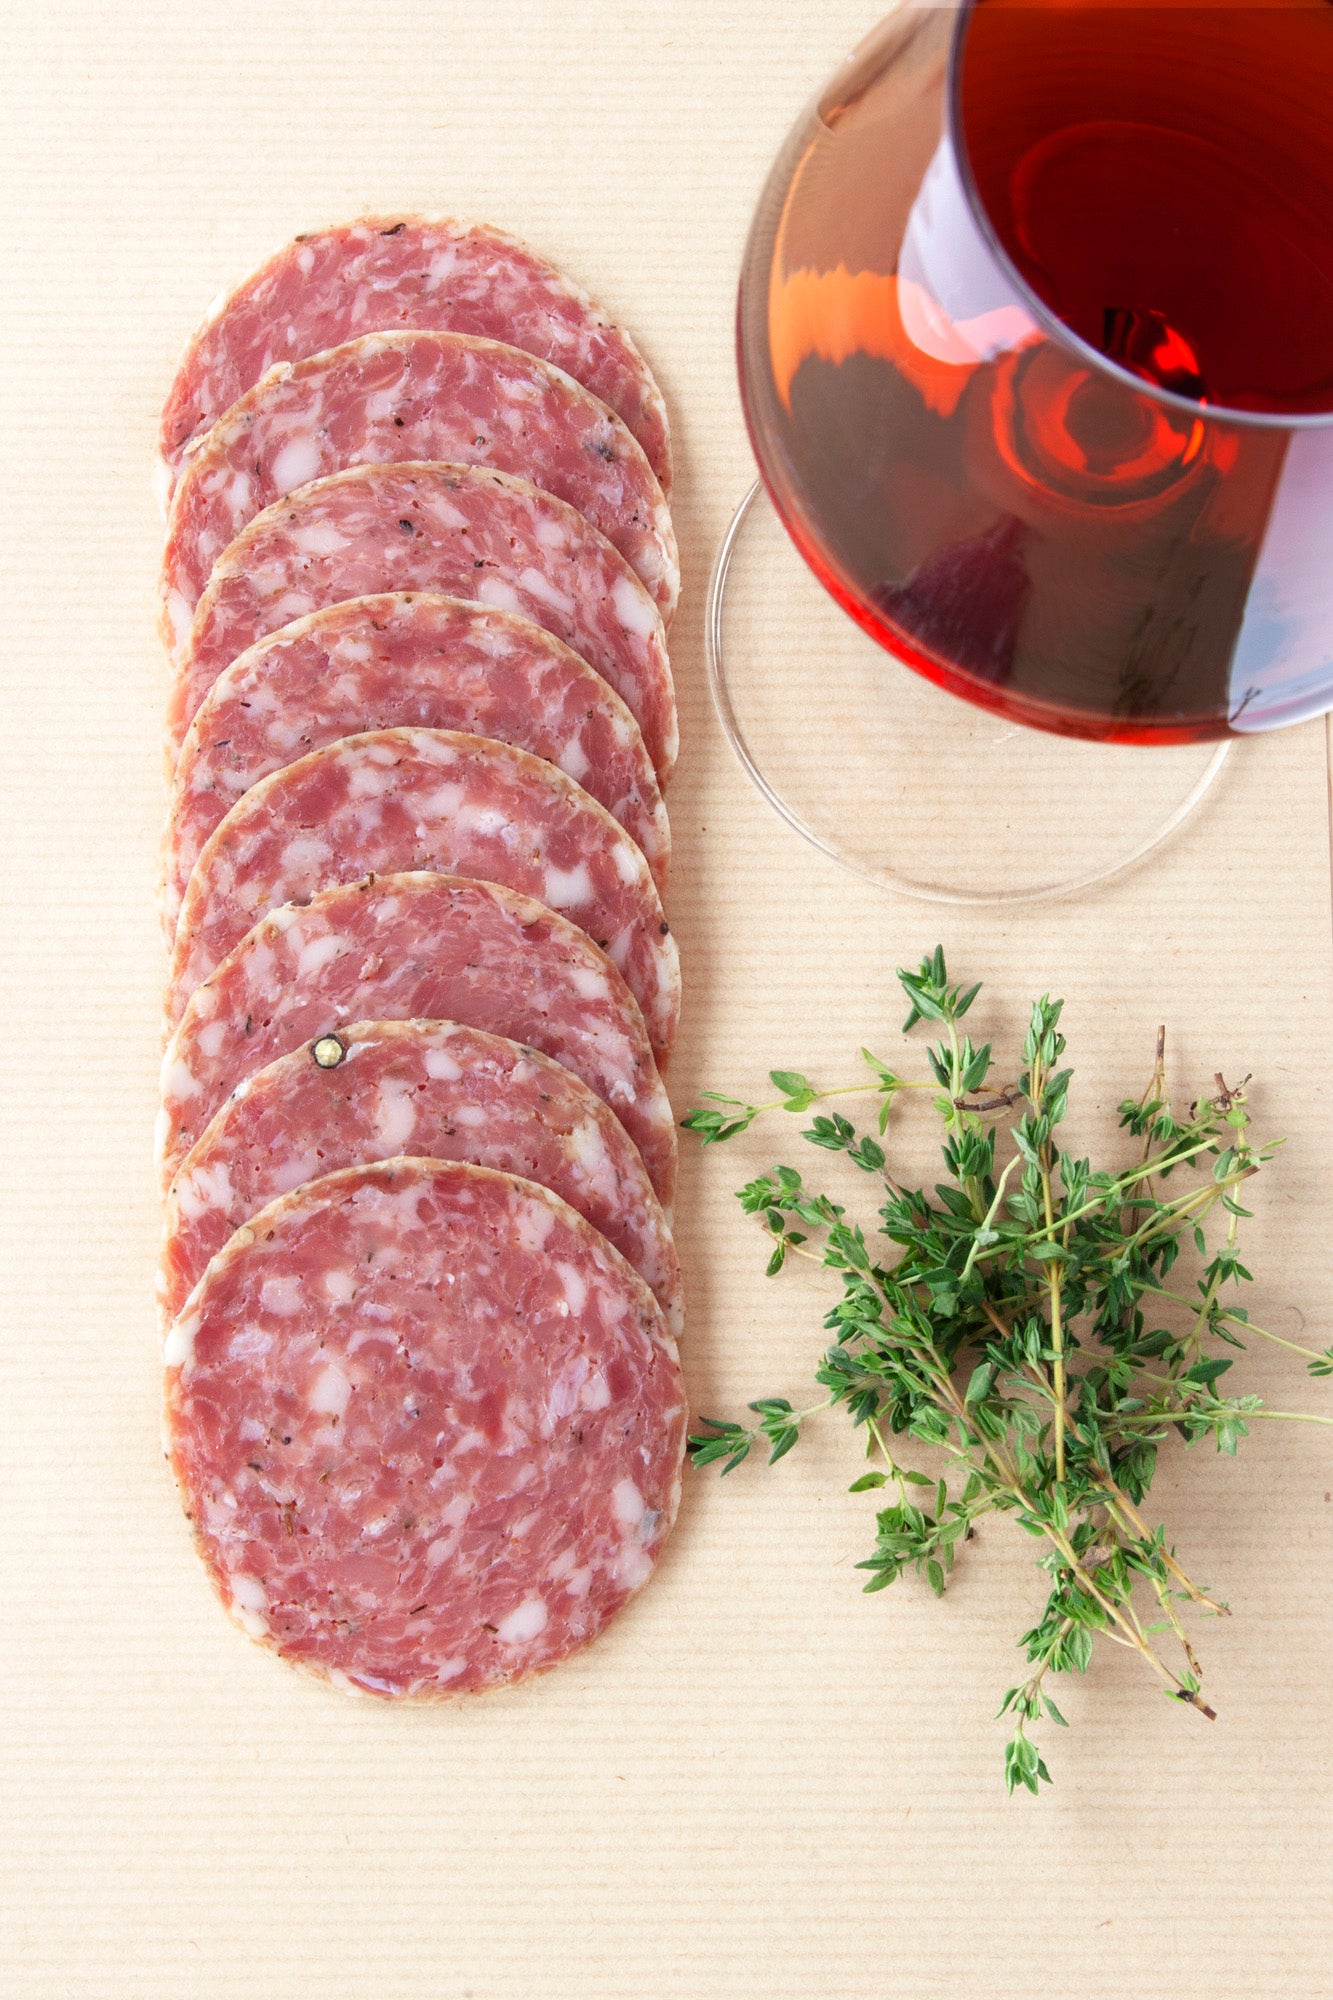 Marsh Pig Salami [Sliced] Red Wine & Thyme - 100g